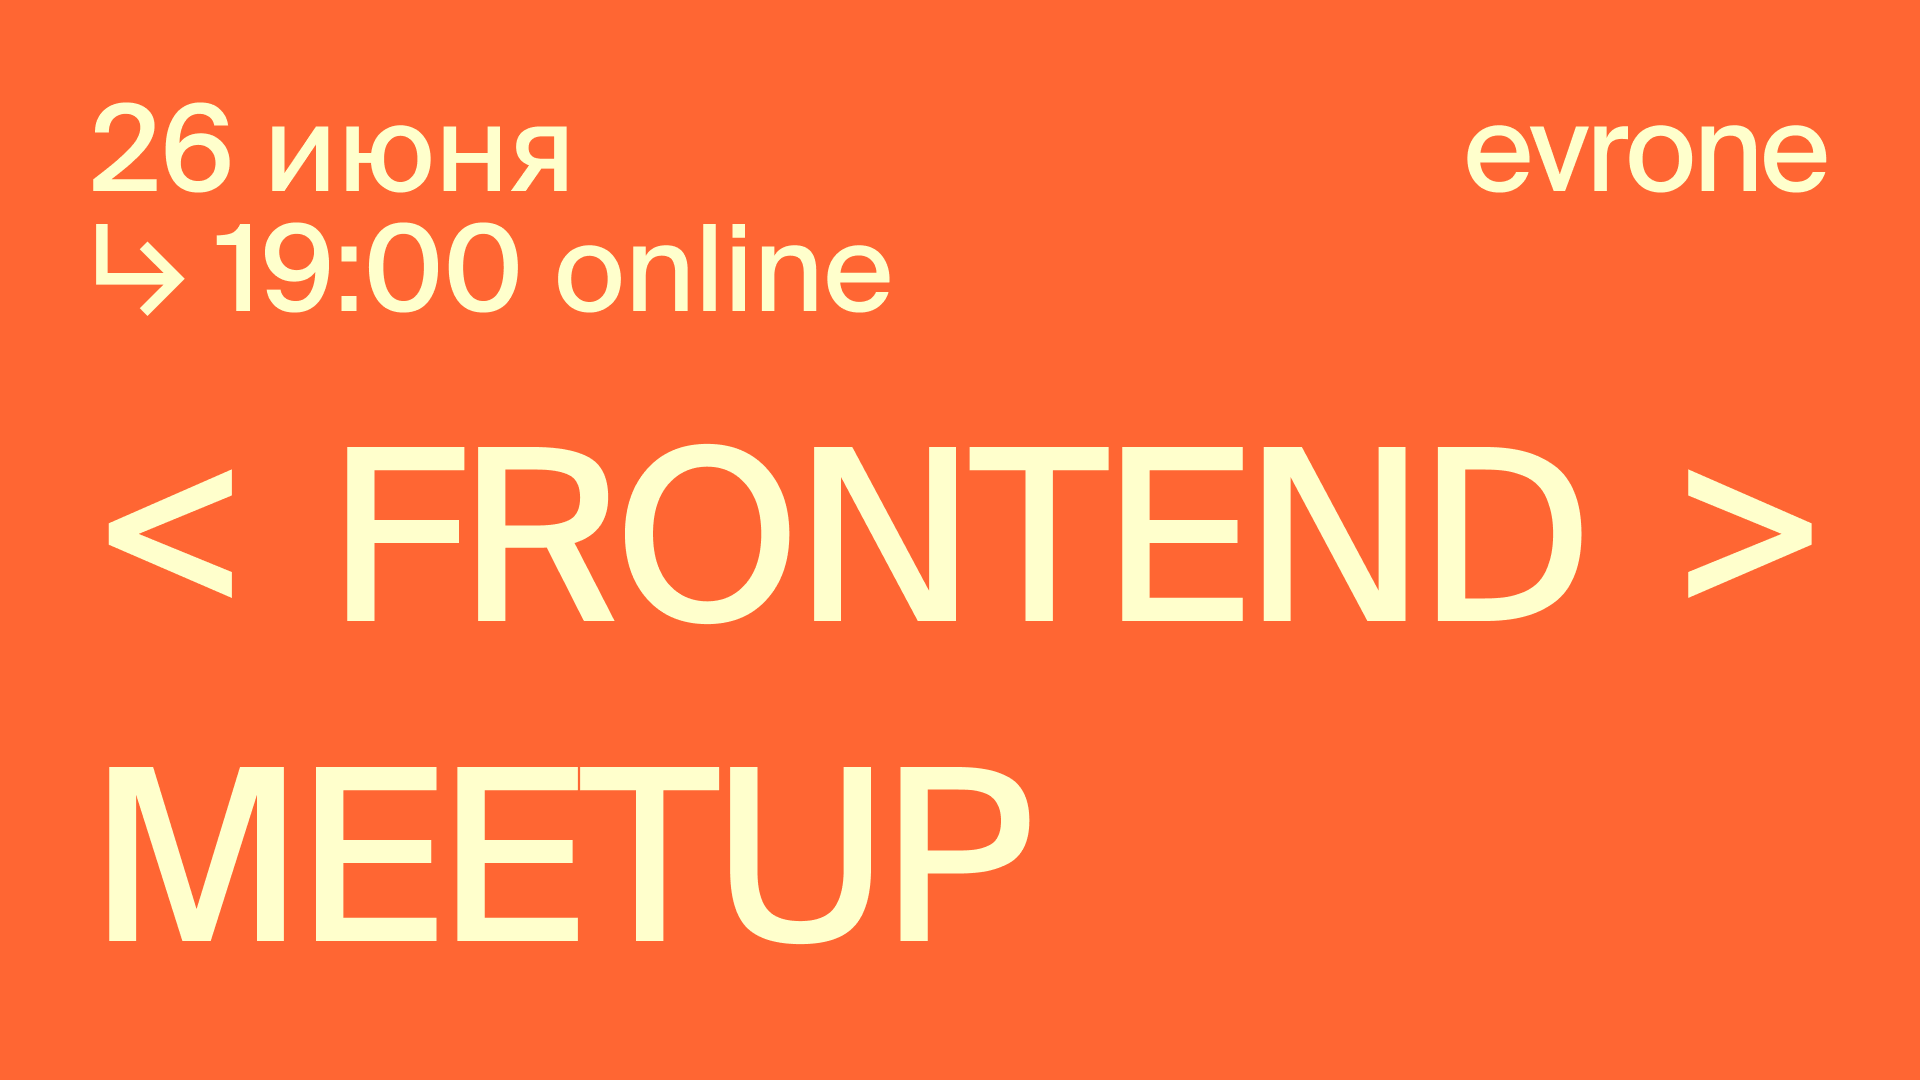 Frontend meetup online